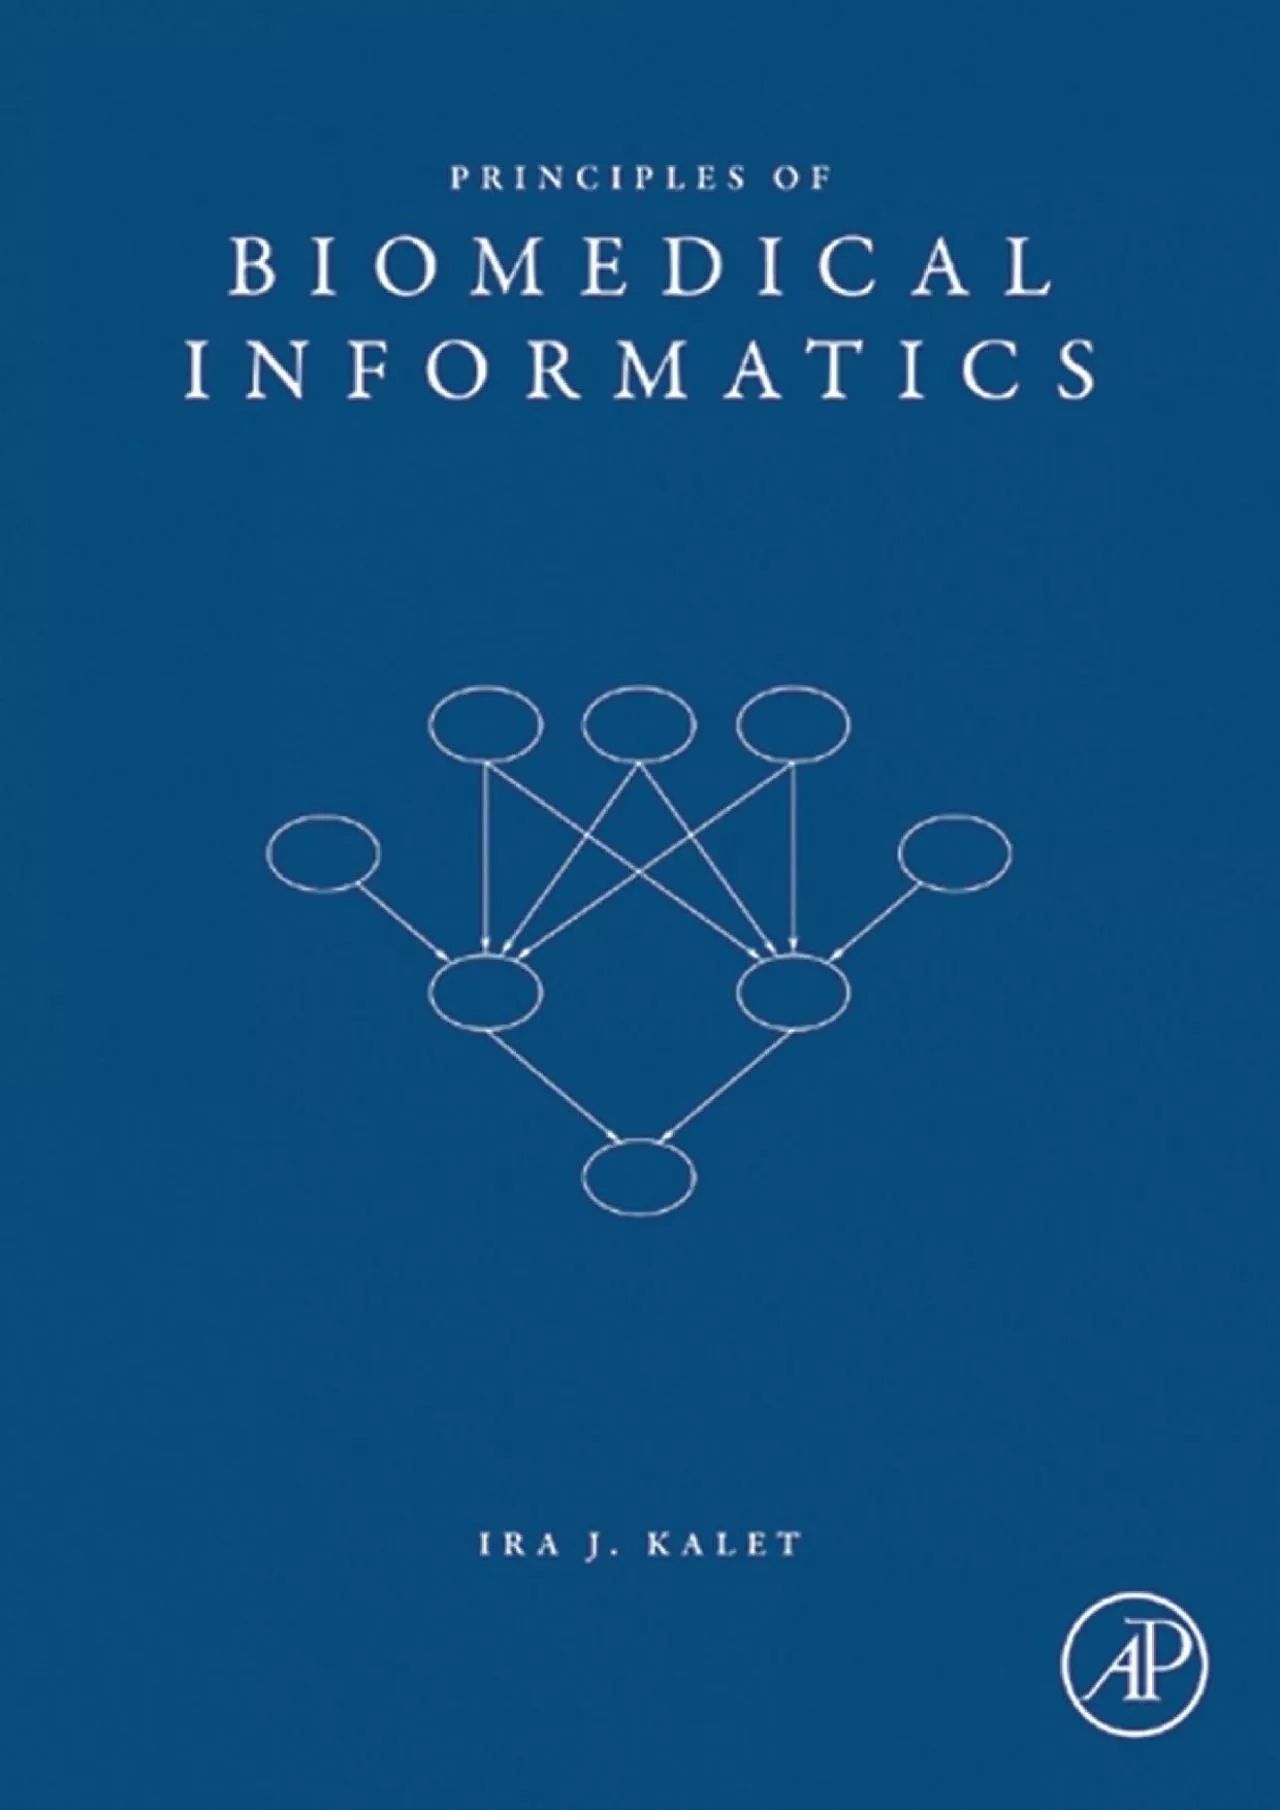 (BOOK)-Principles of Biomedical Informatics